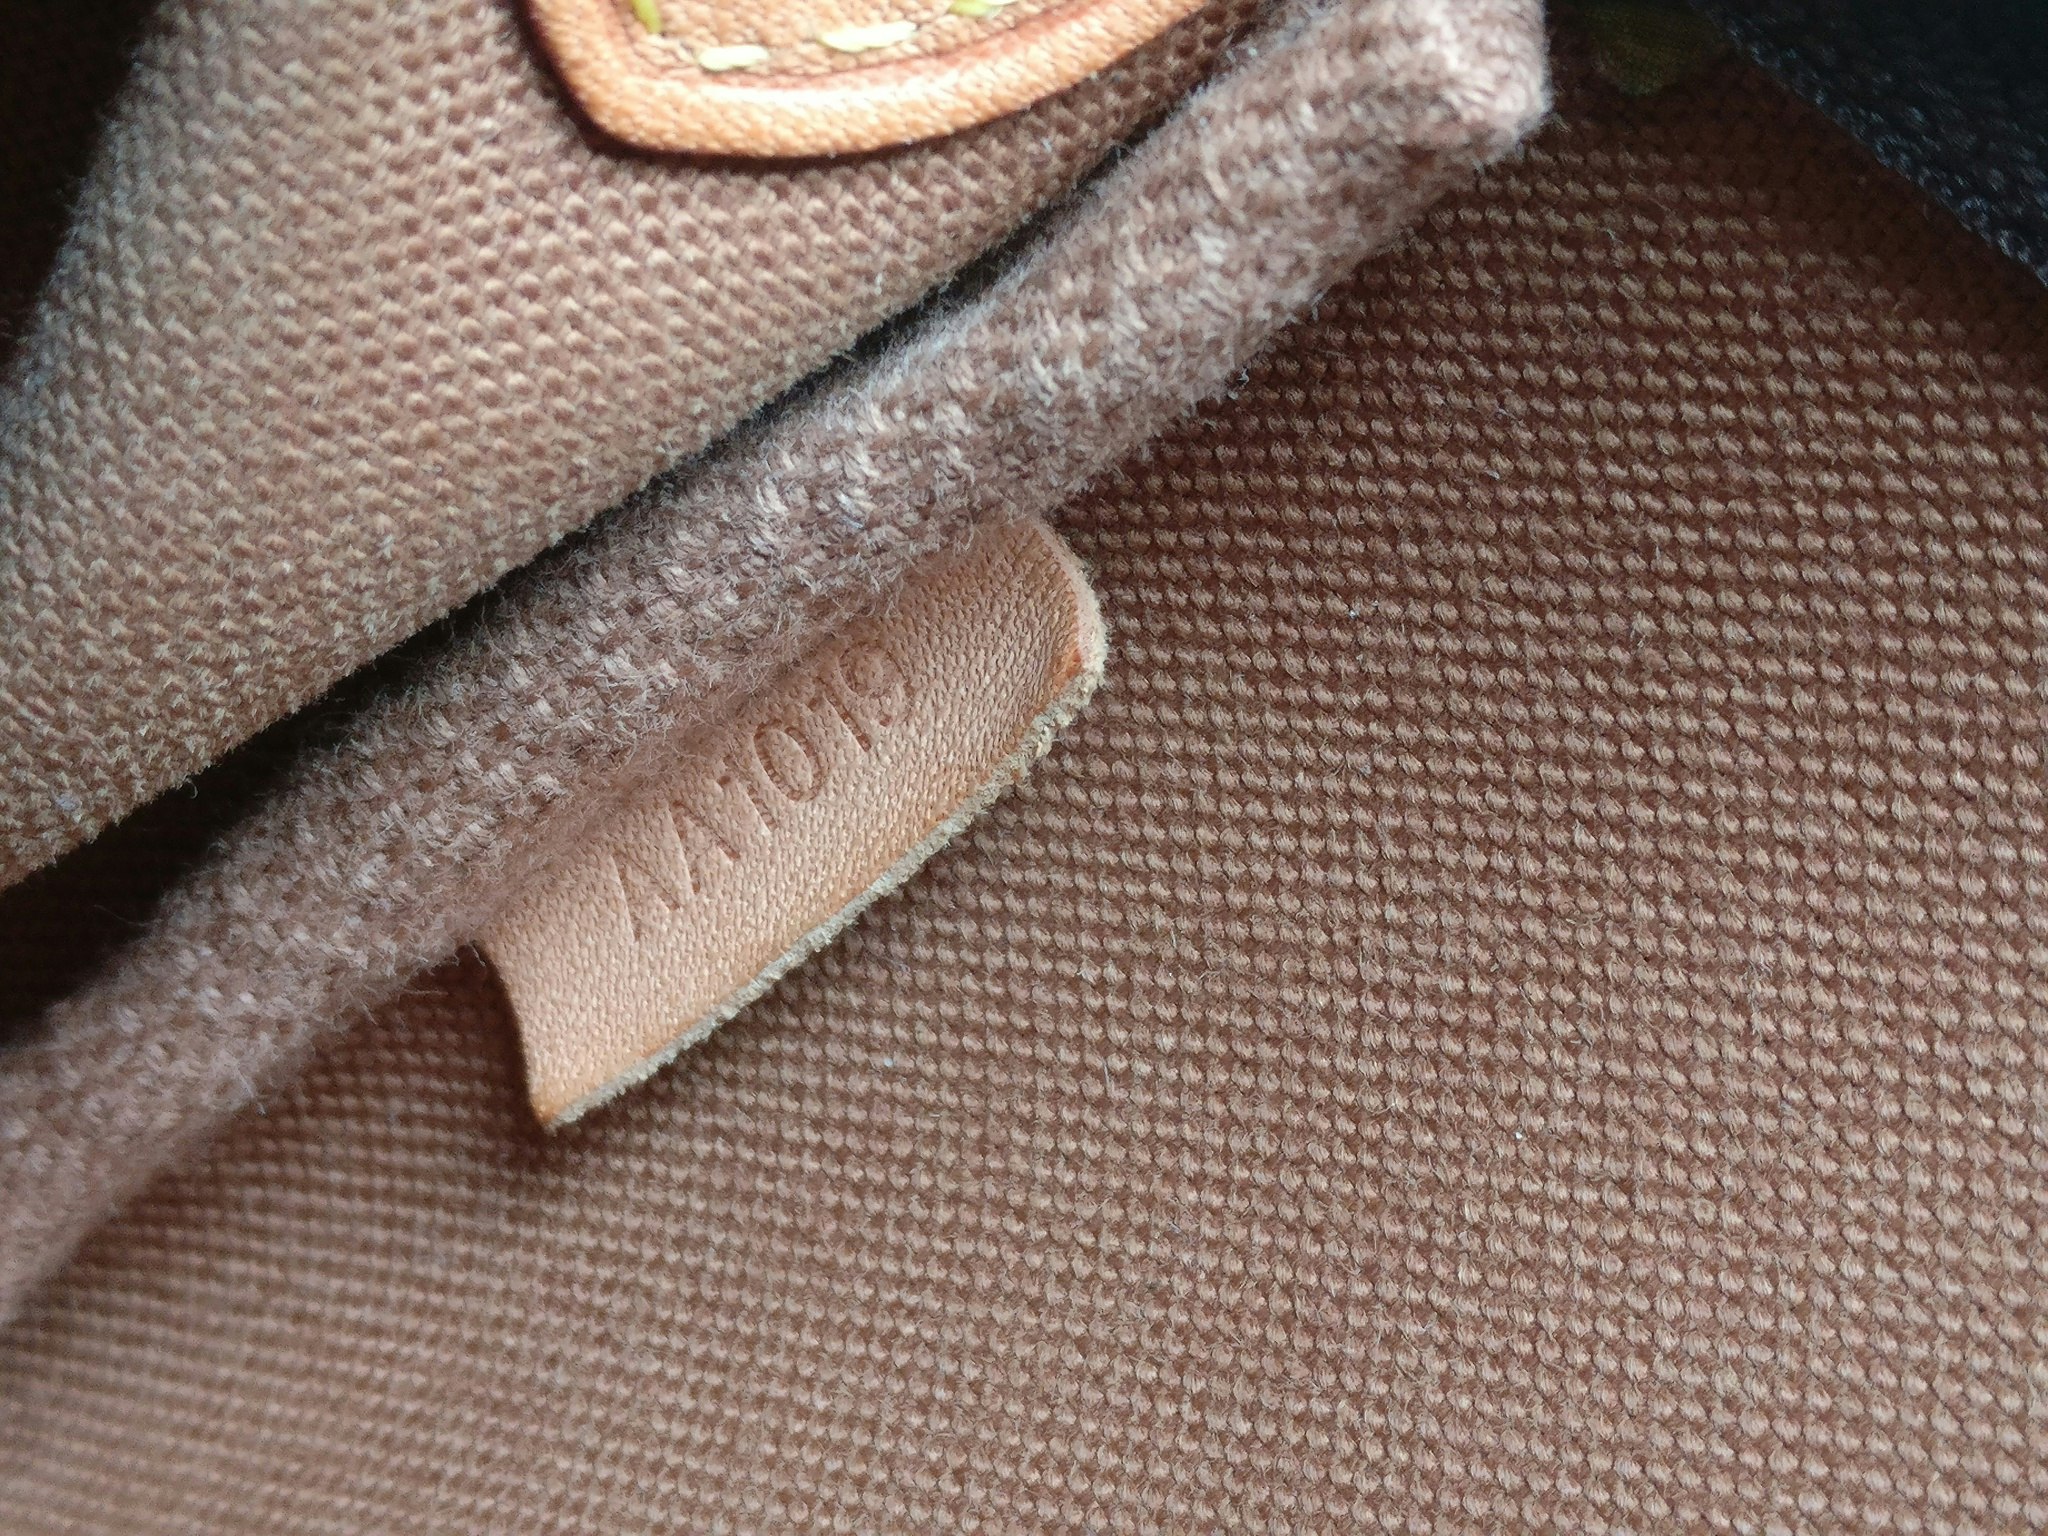 Louis Vuitton Eva with defect on zipper